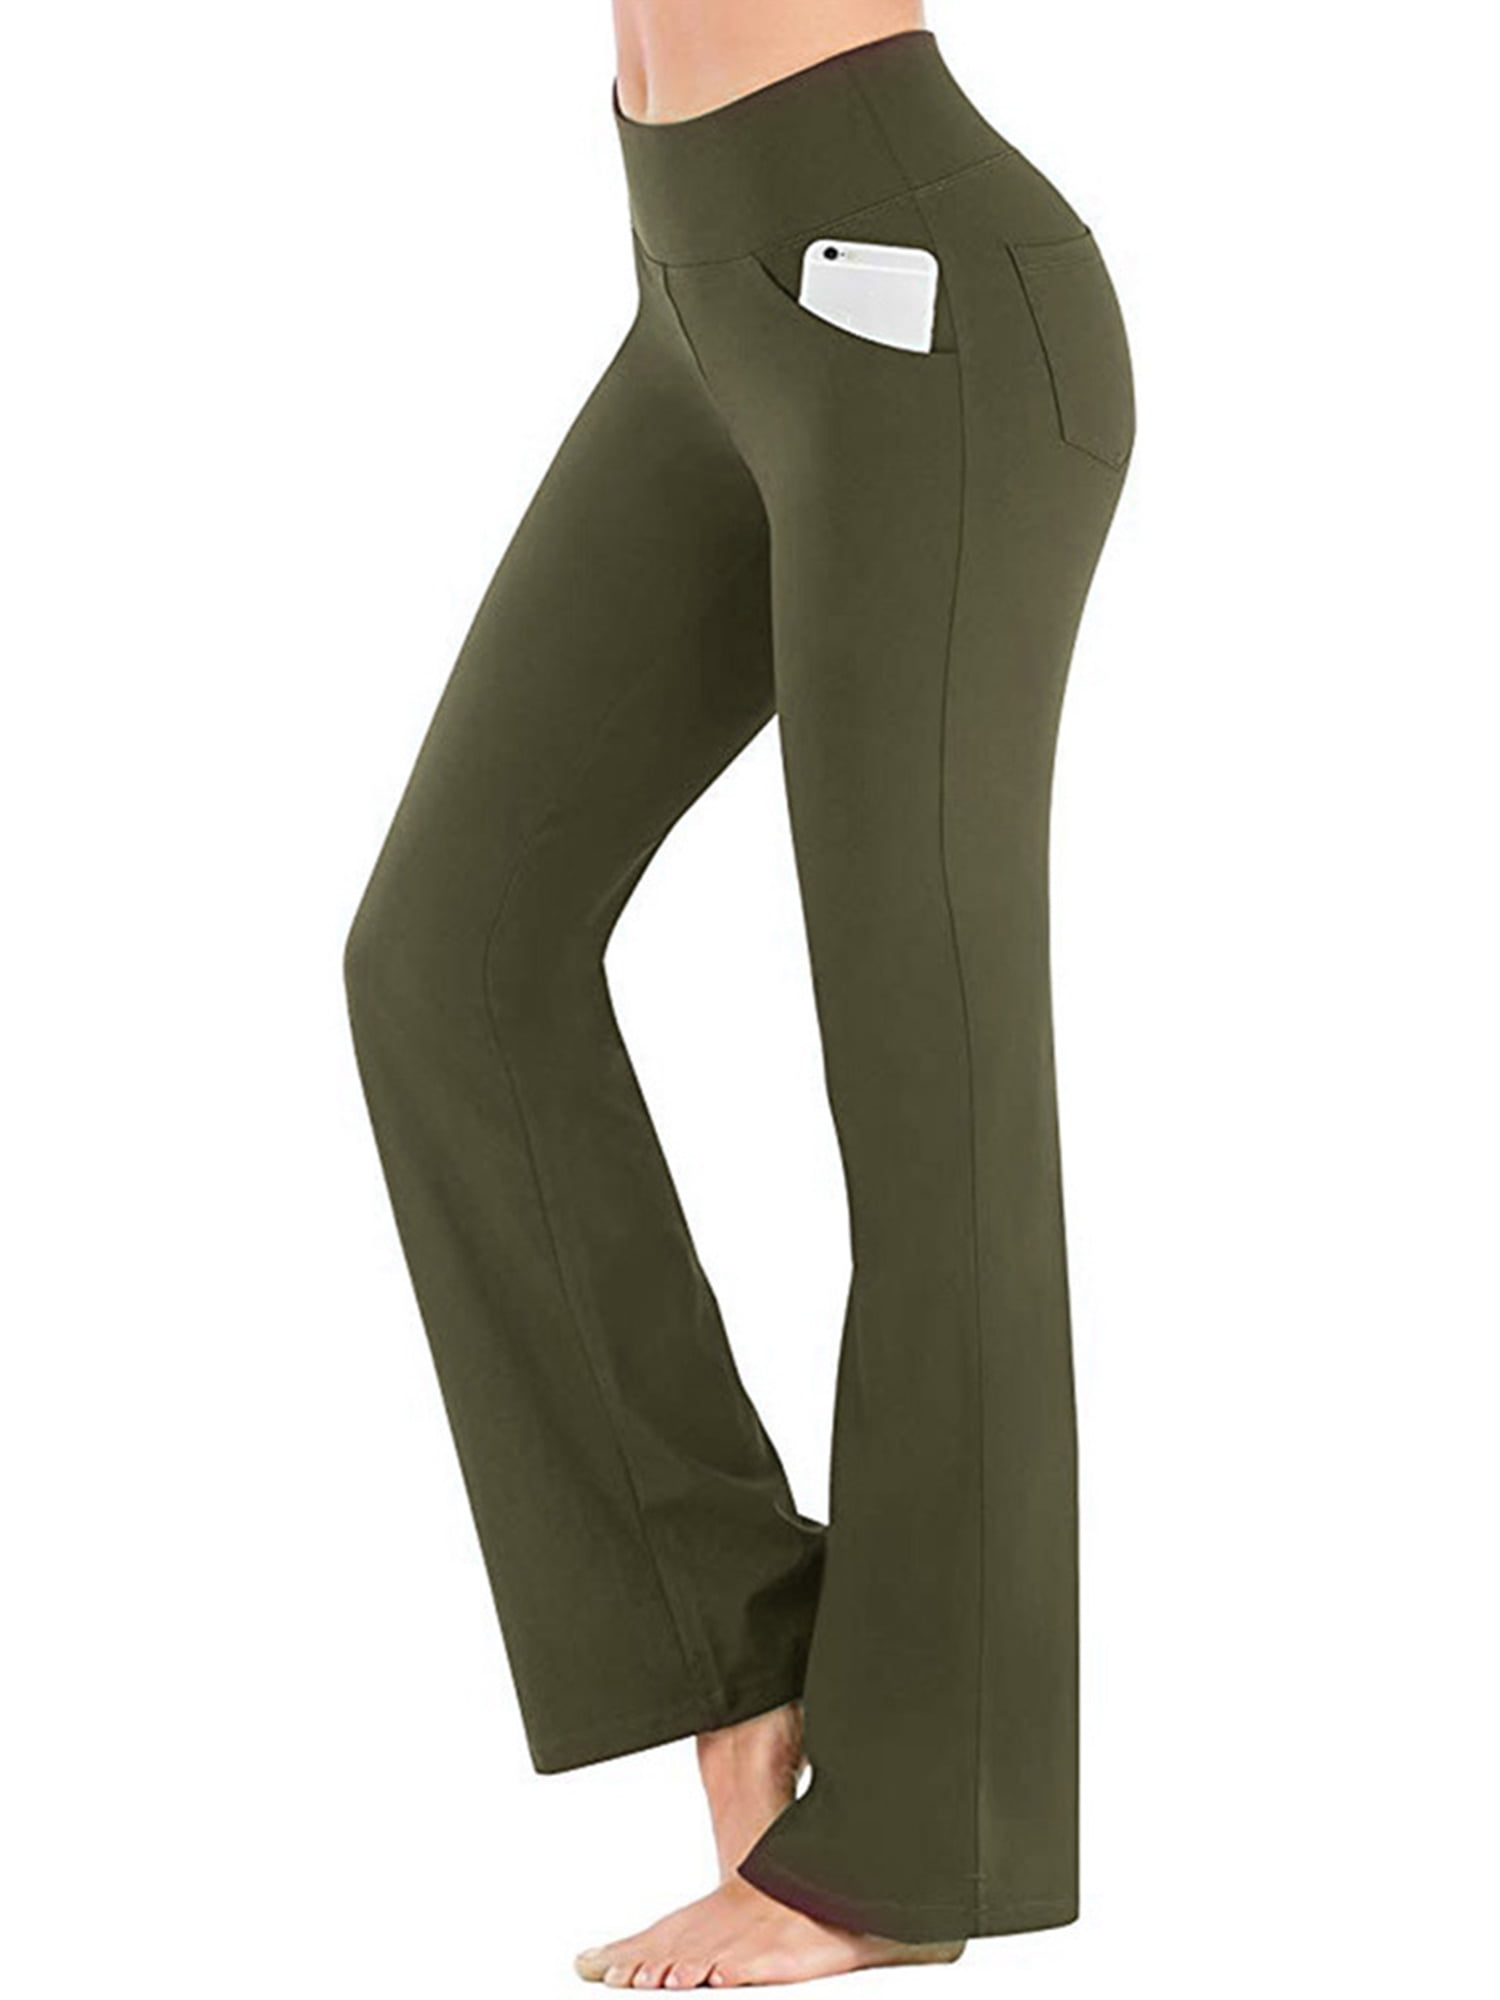 Avamo Women's Bootcut Yoga Pants with Pockets Moisture-Wicking